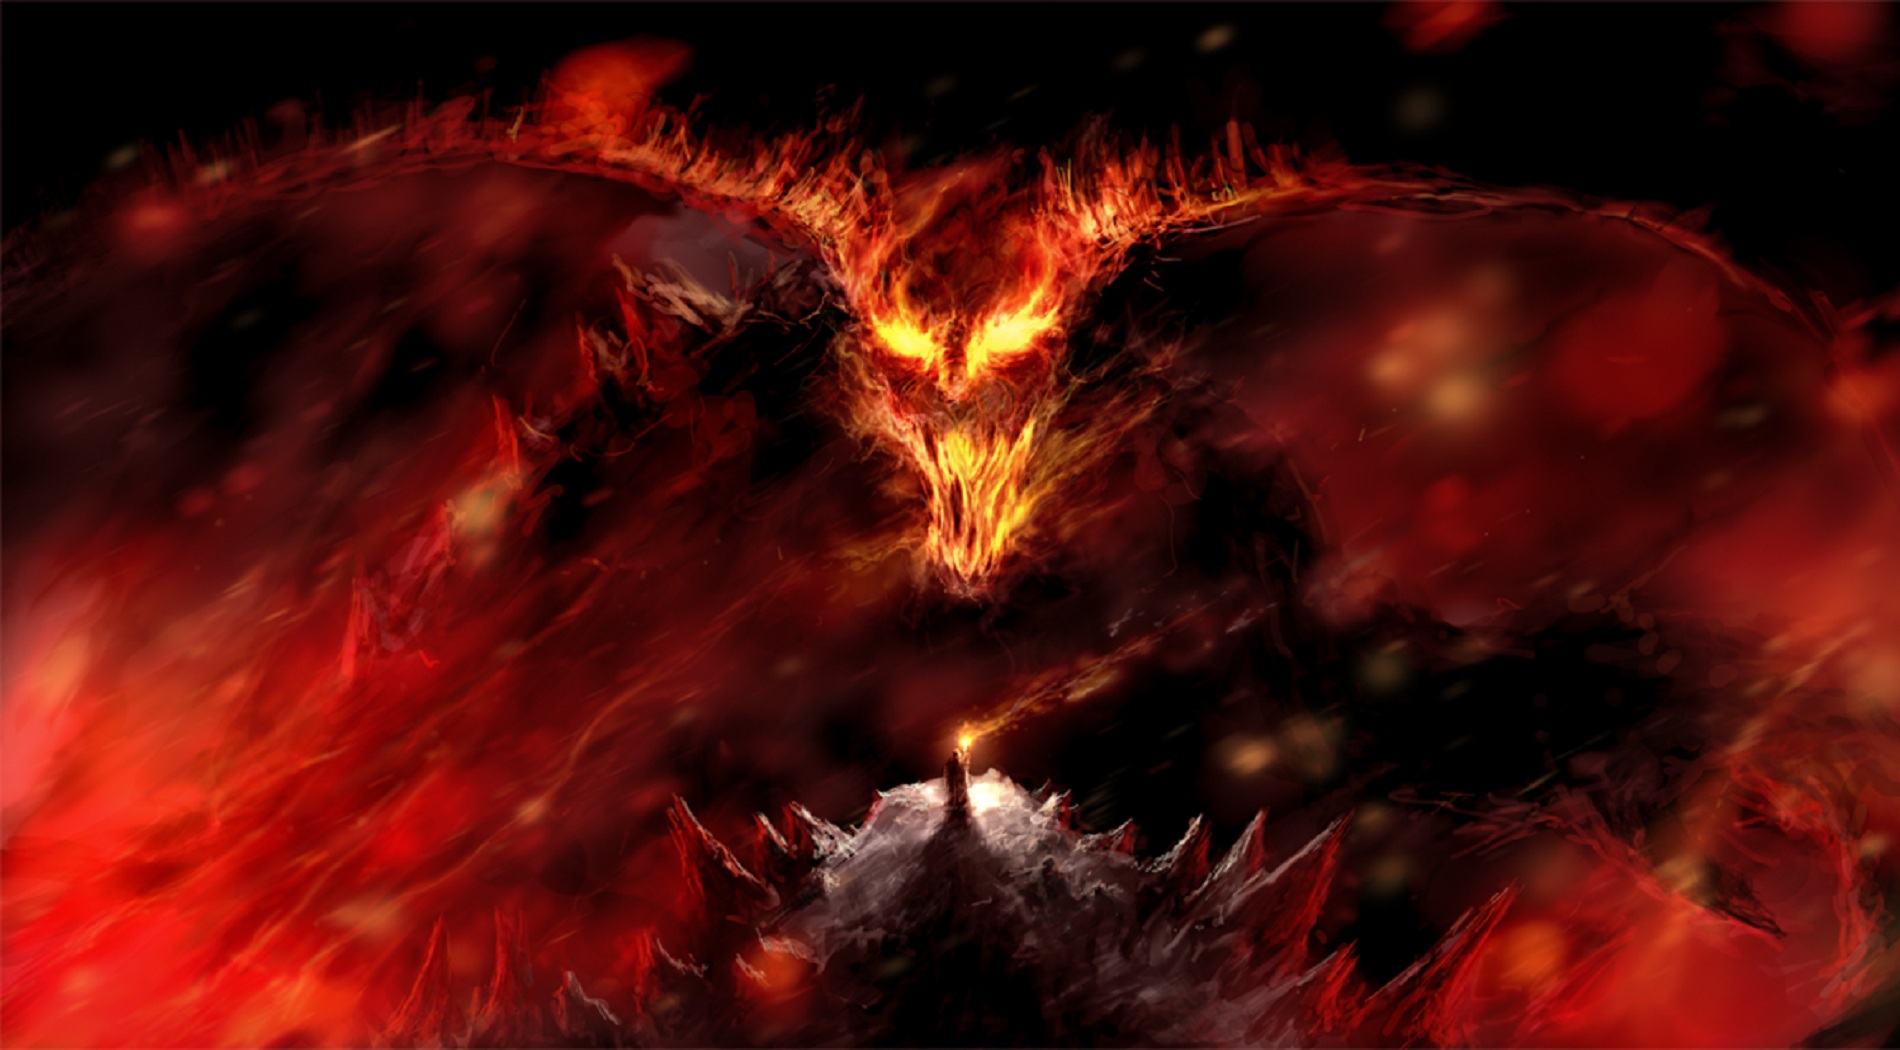 Fantasy - Demon Wallpaper